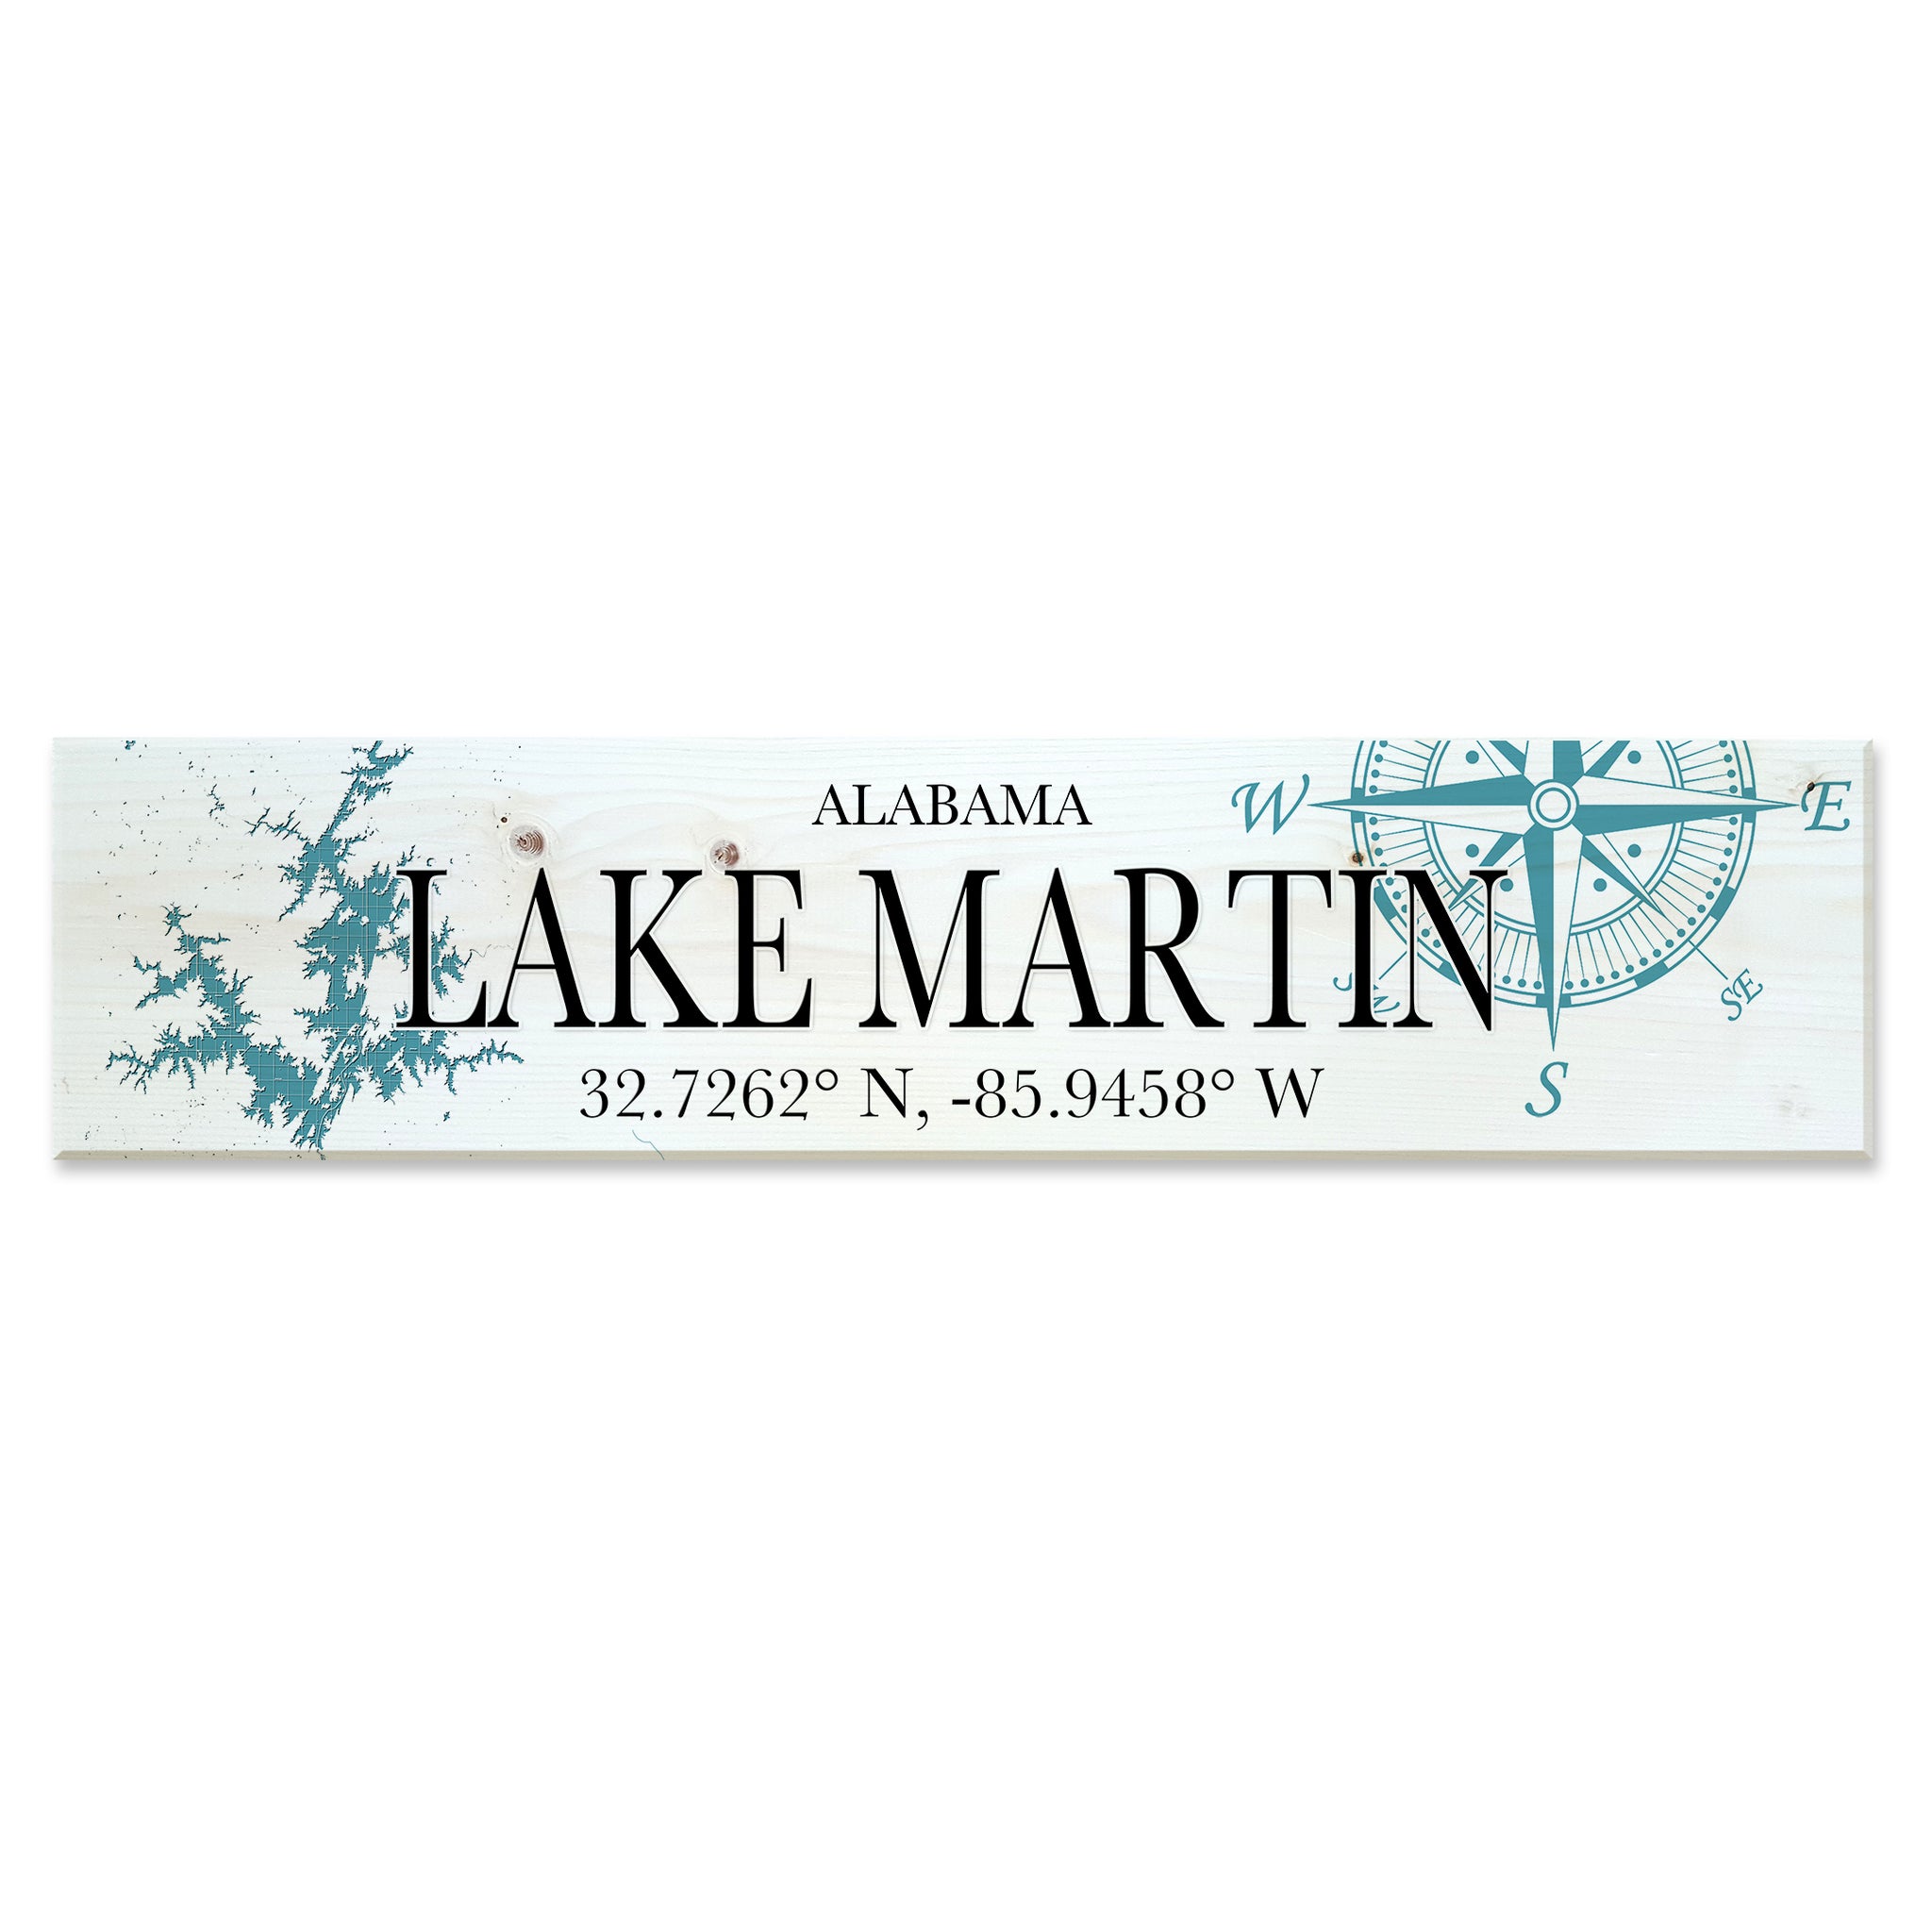 Lake Martin,  AL Coordinate Sign